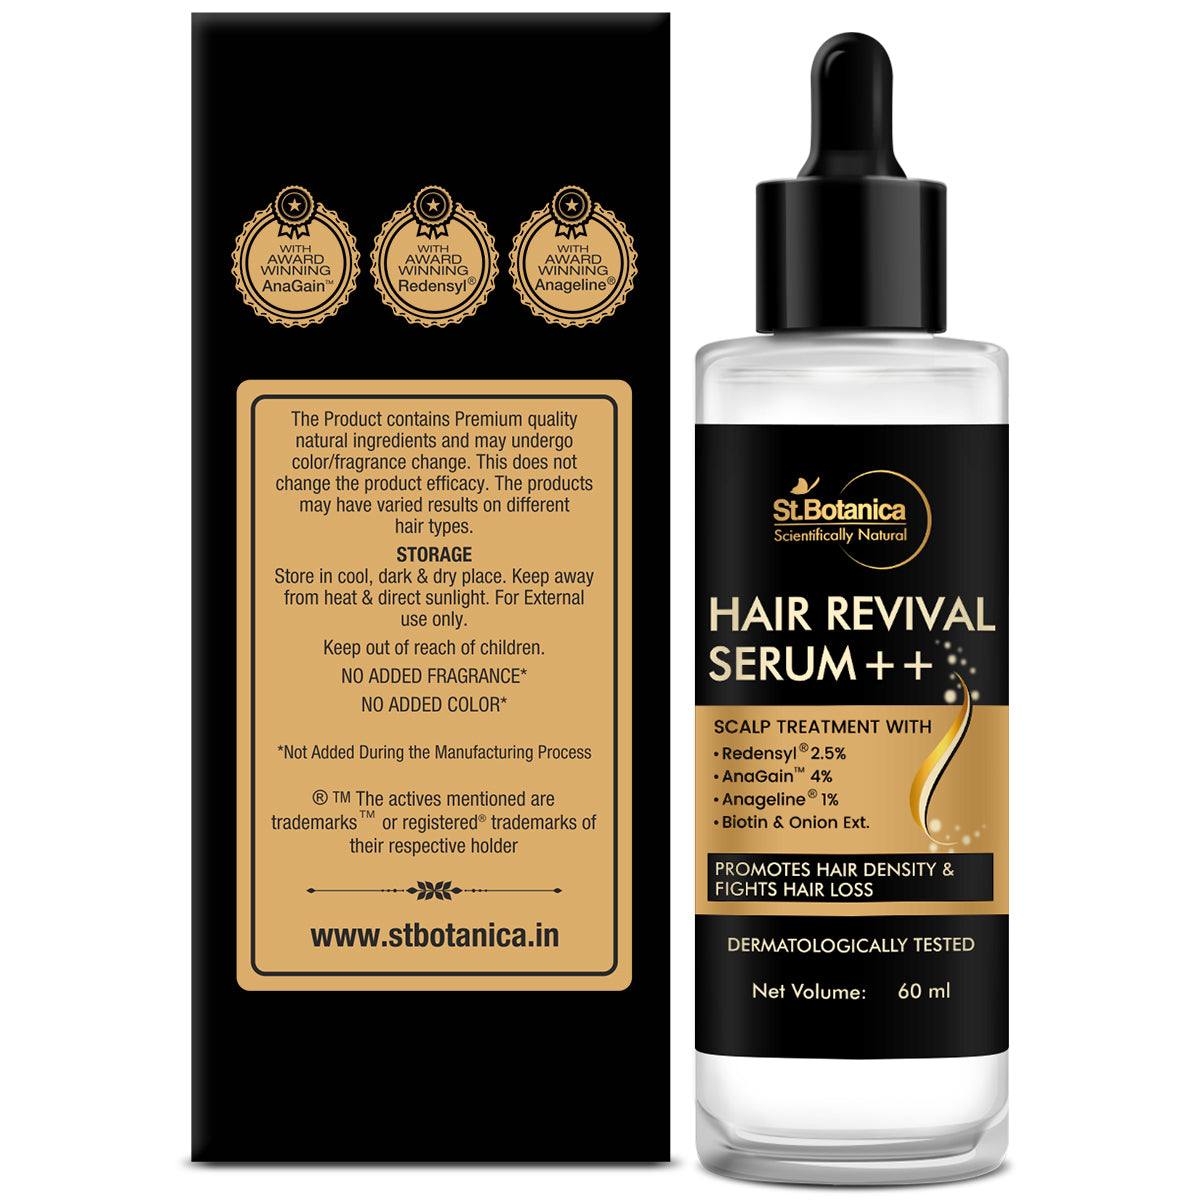 St.Botanica Natural Hair Revival Serum ++ With Redensyl 2.5%, Anagain 4%, Anageline 1%, Biotin & Onion Oil, 60 ml